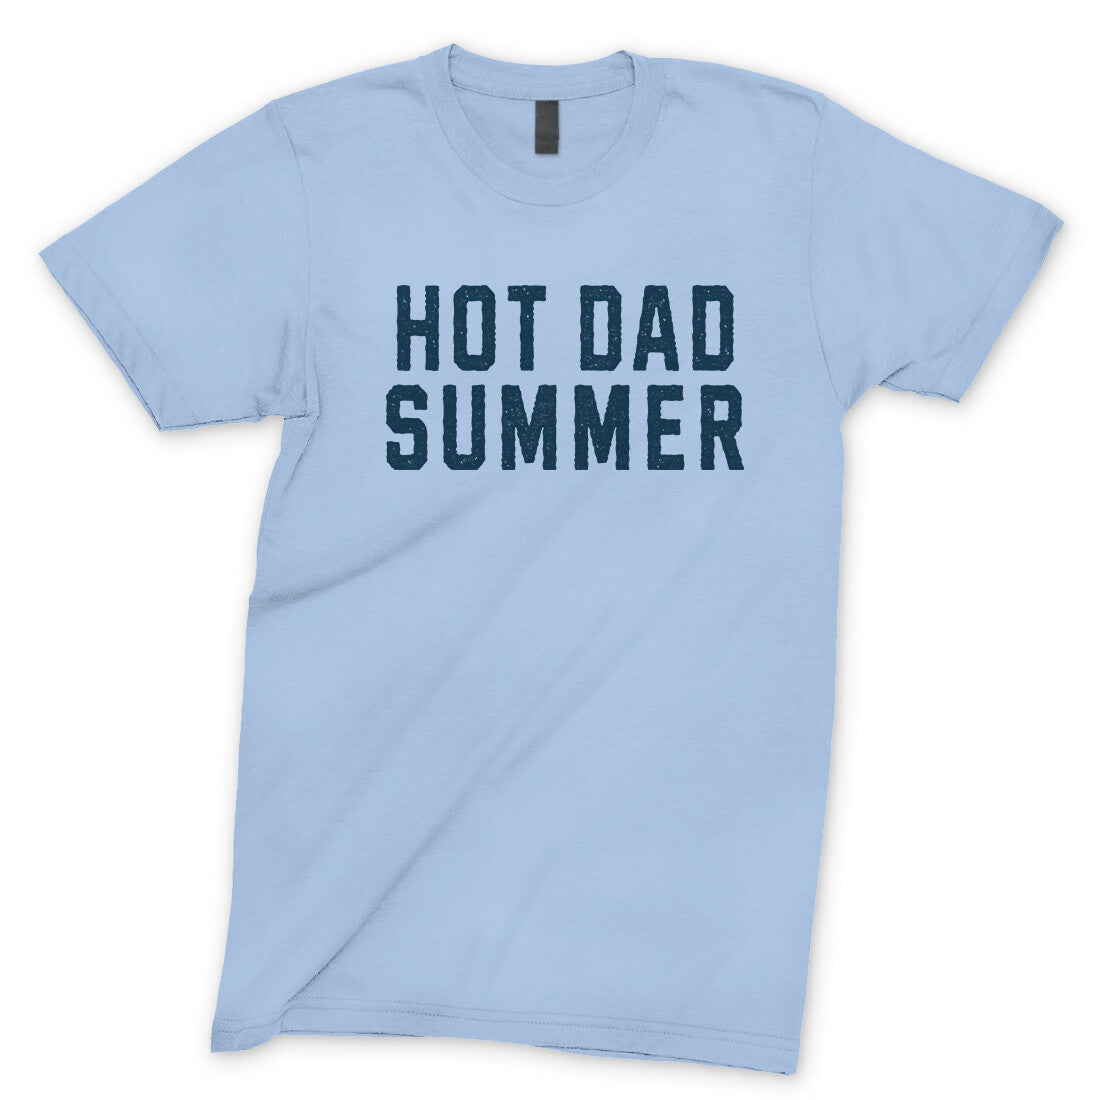 Hot Dad Summer in Light Blue Color